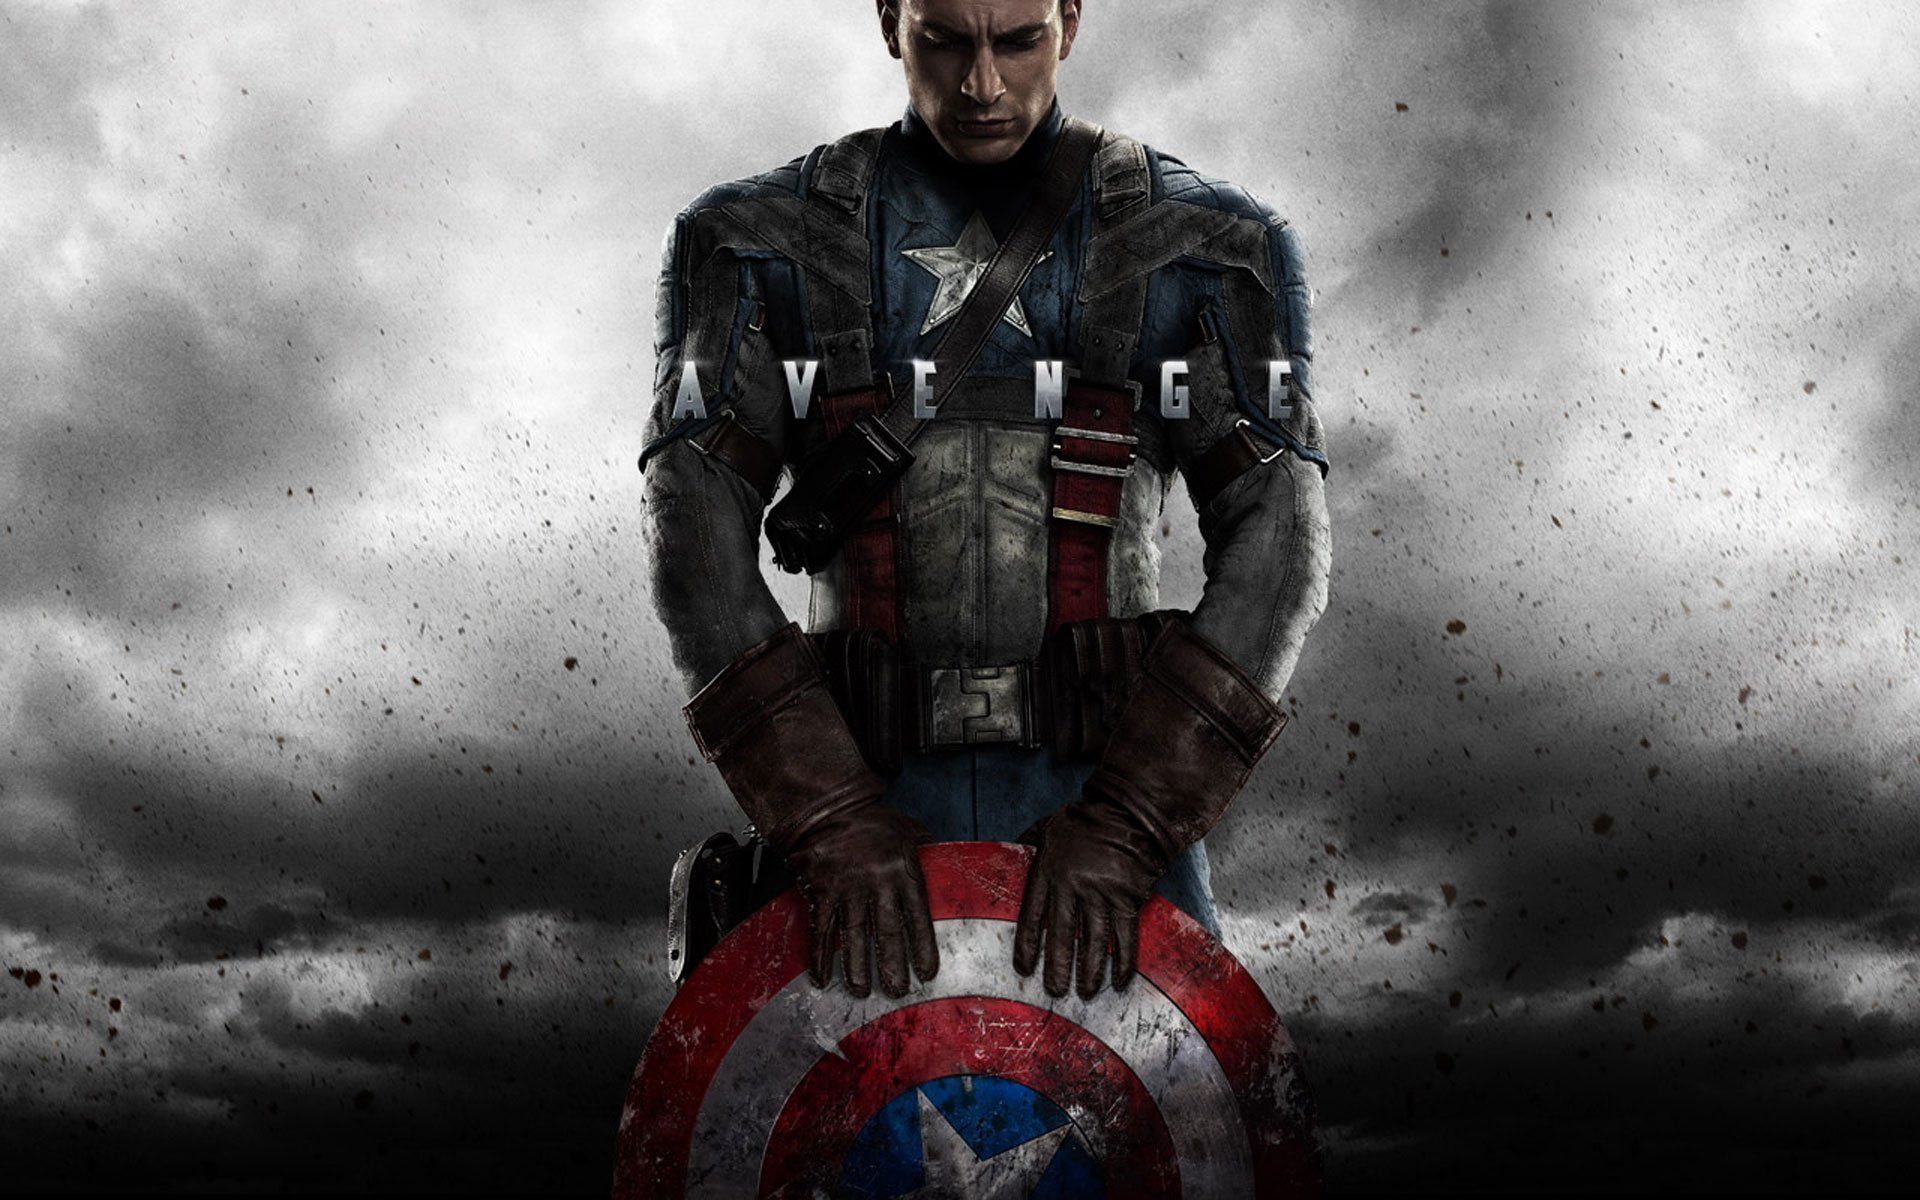 Captain America Image.jpg